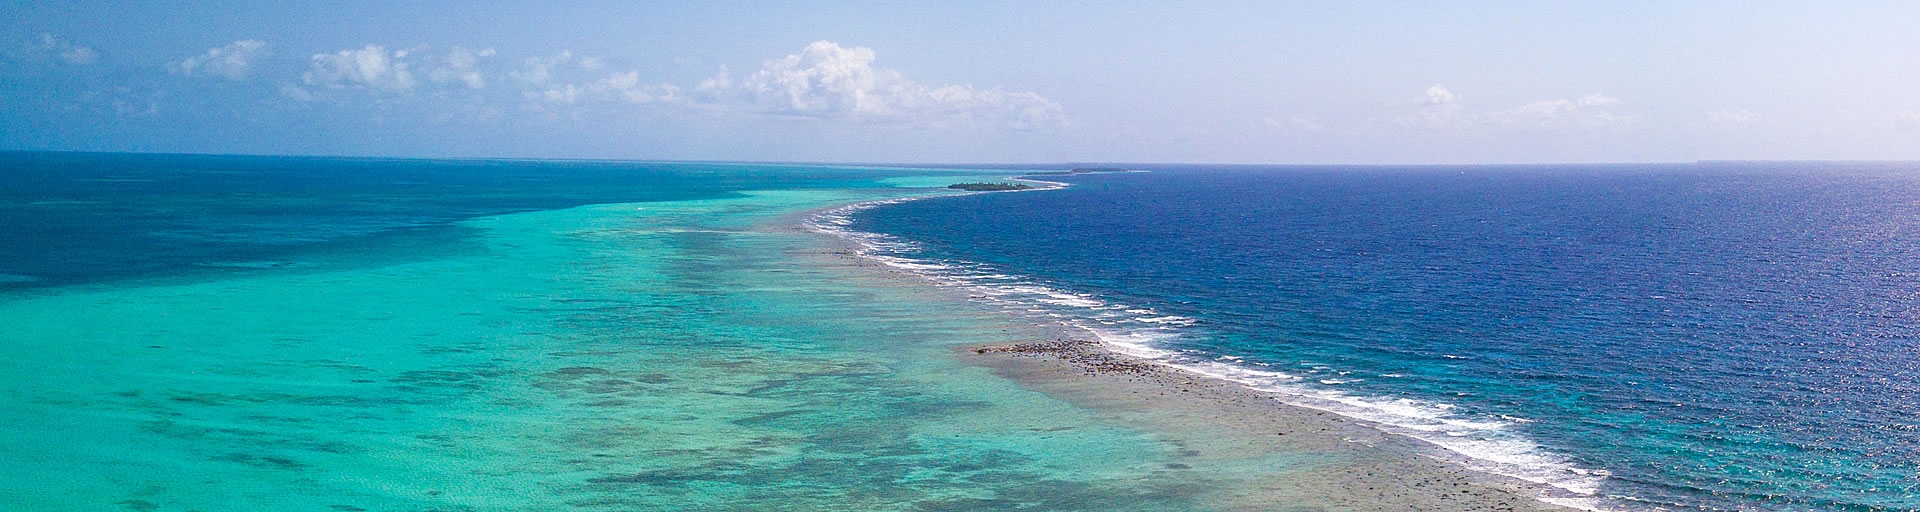 Barrier Reef Belize